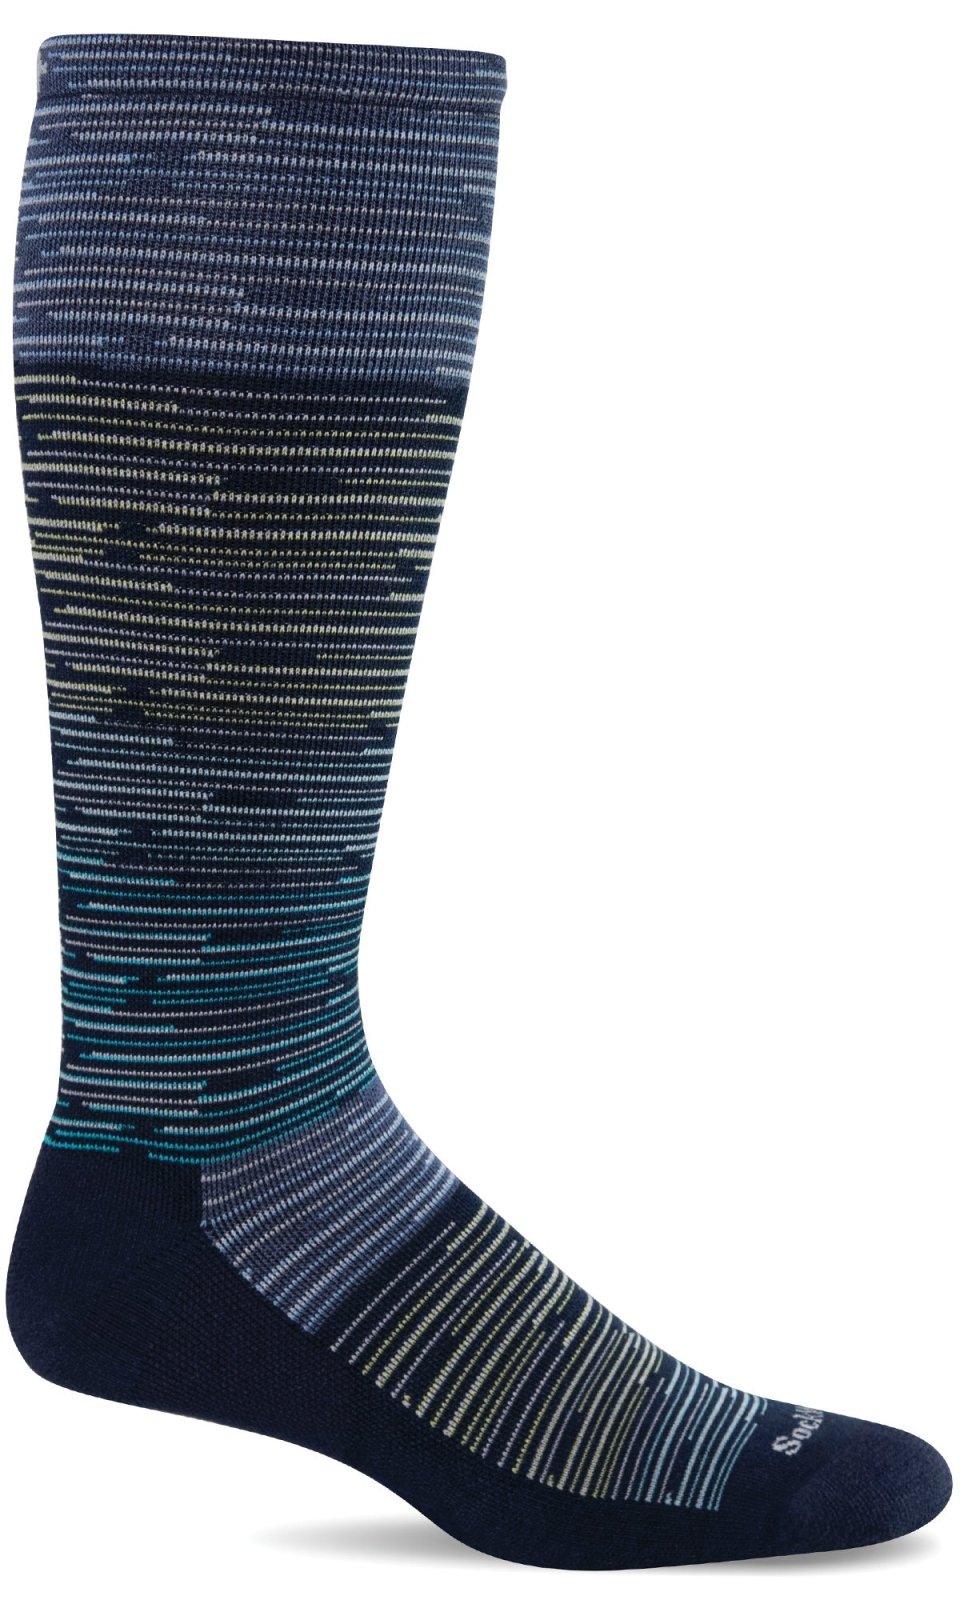 Men's Digi Space Dye | Moderate Graduated Compression Socks - Merino Wool Lifestyle Compression - Sockwell